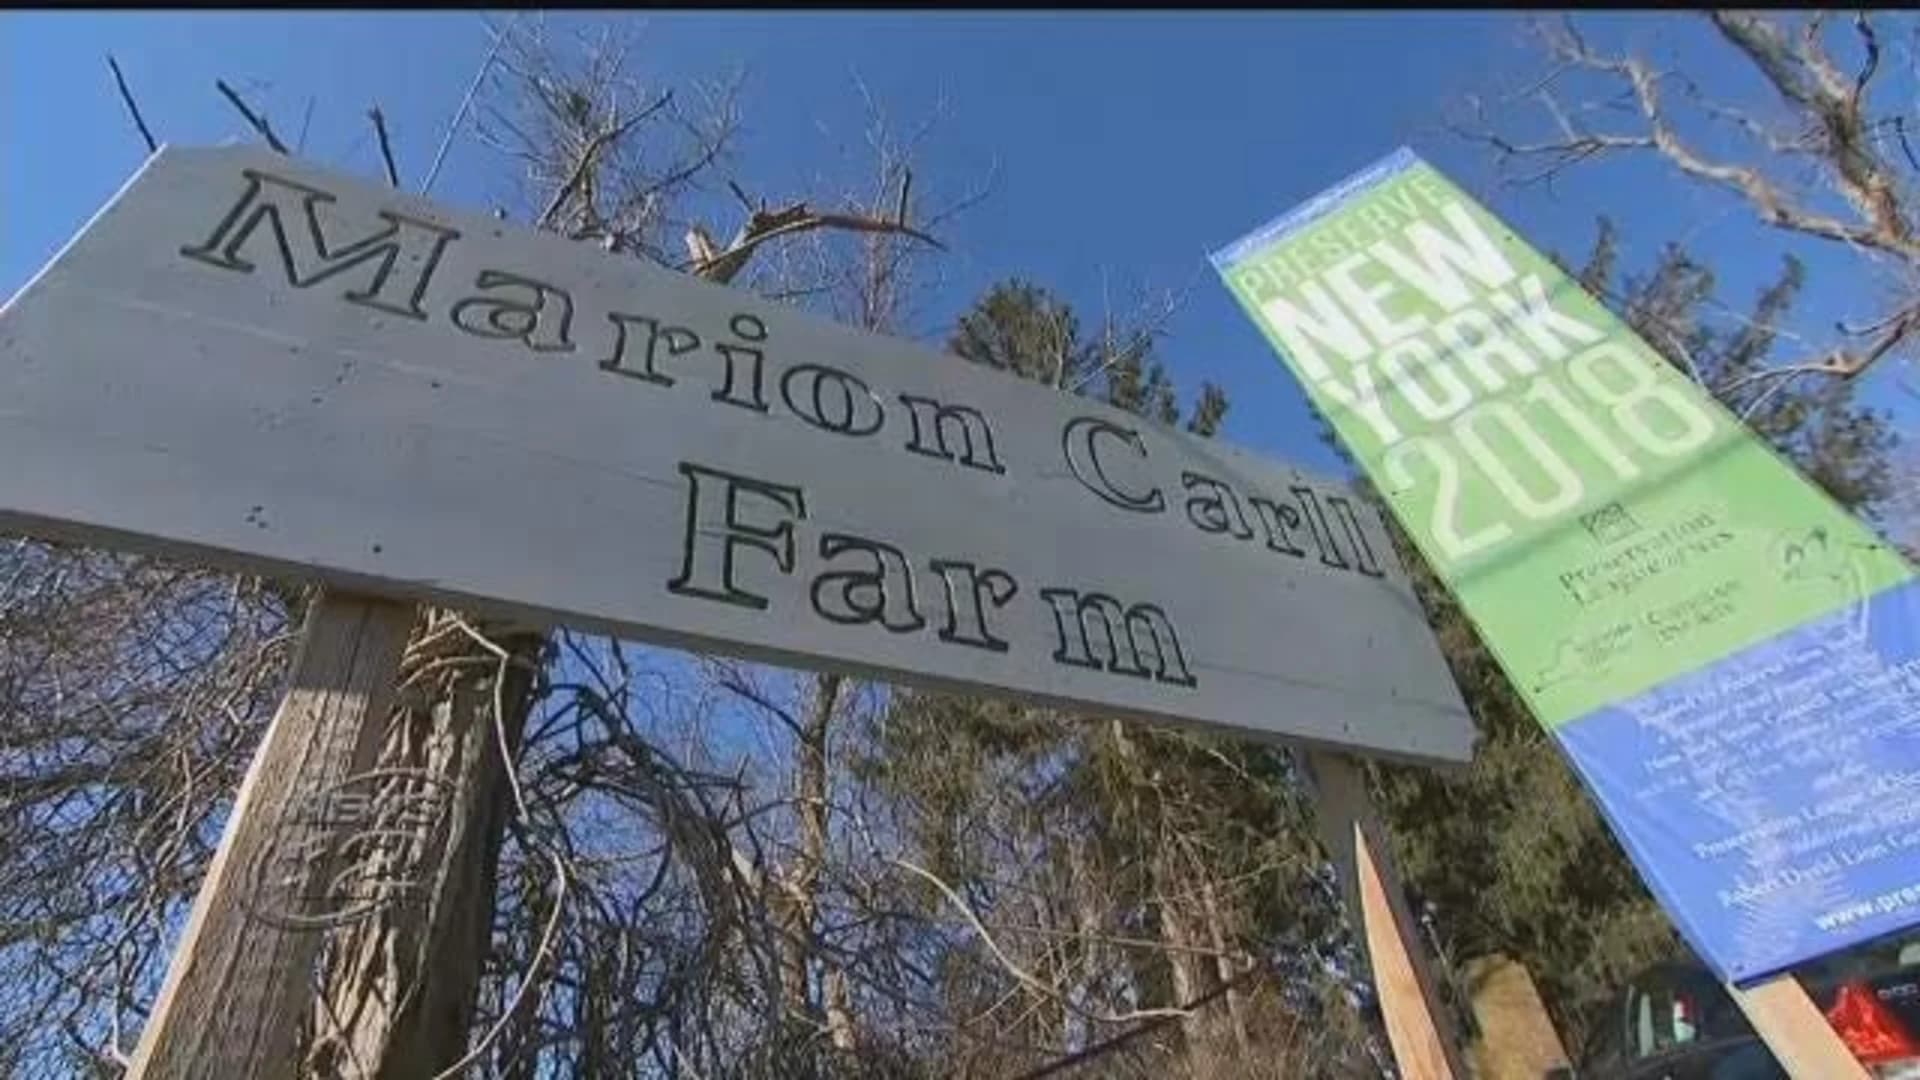 Commack SD looks to preserve historic Marion Carll Farm